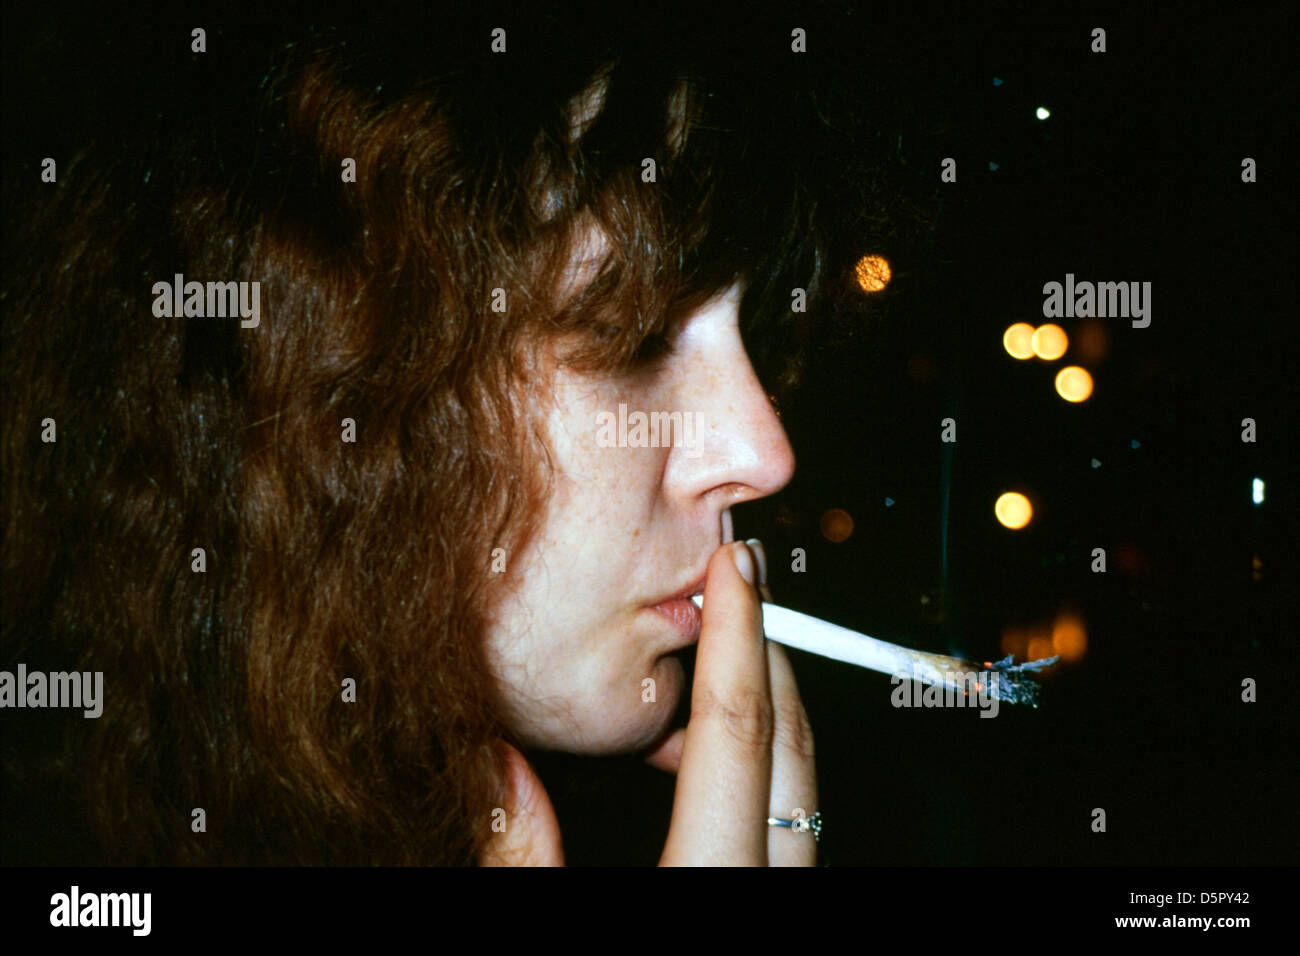 woman smoking a cannabis joint Stock Photo